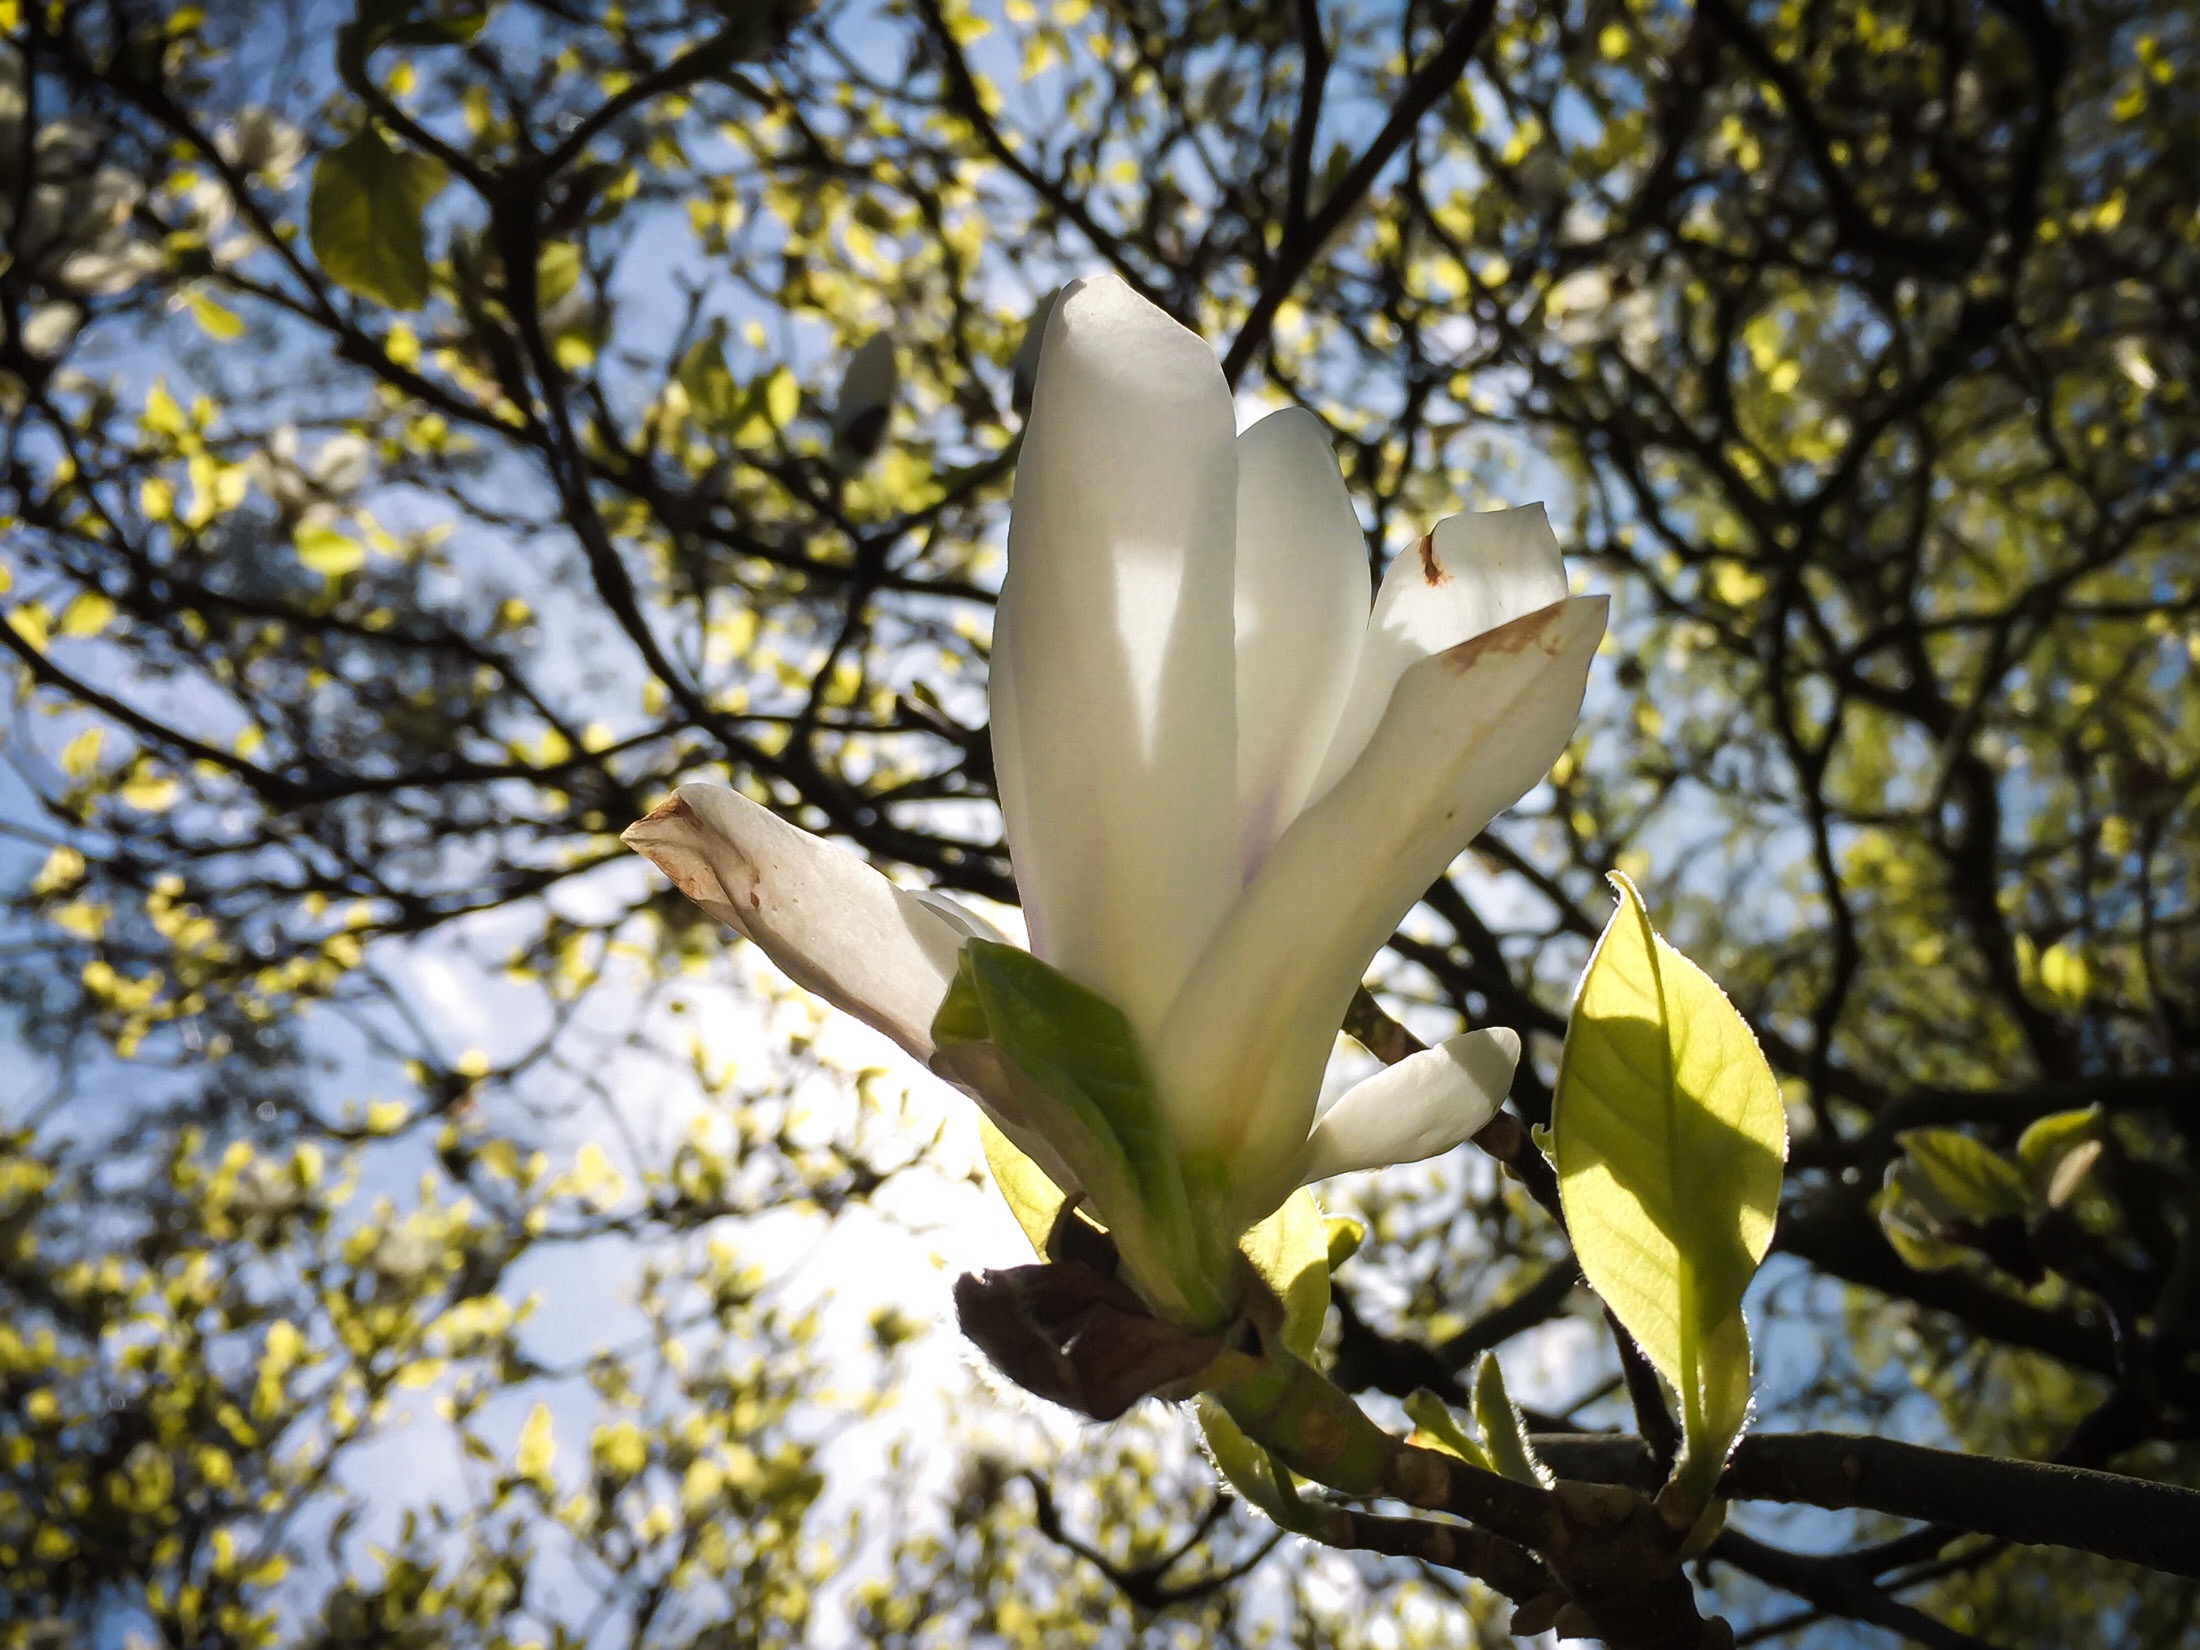 Day 204.2 – Waning Magnolia